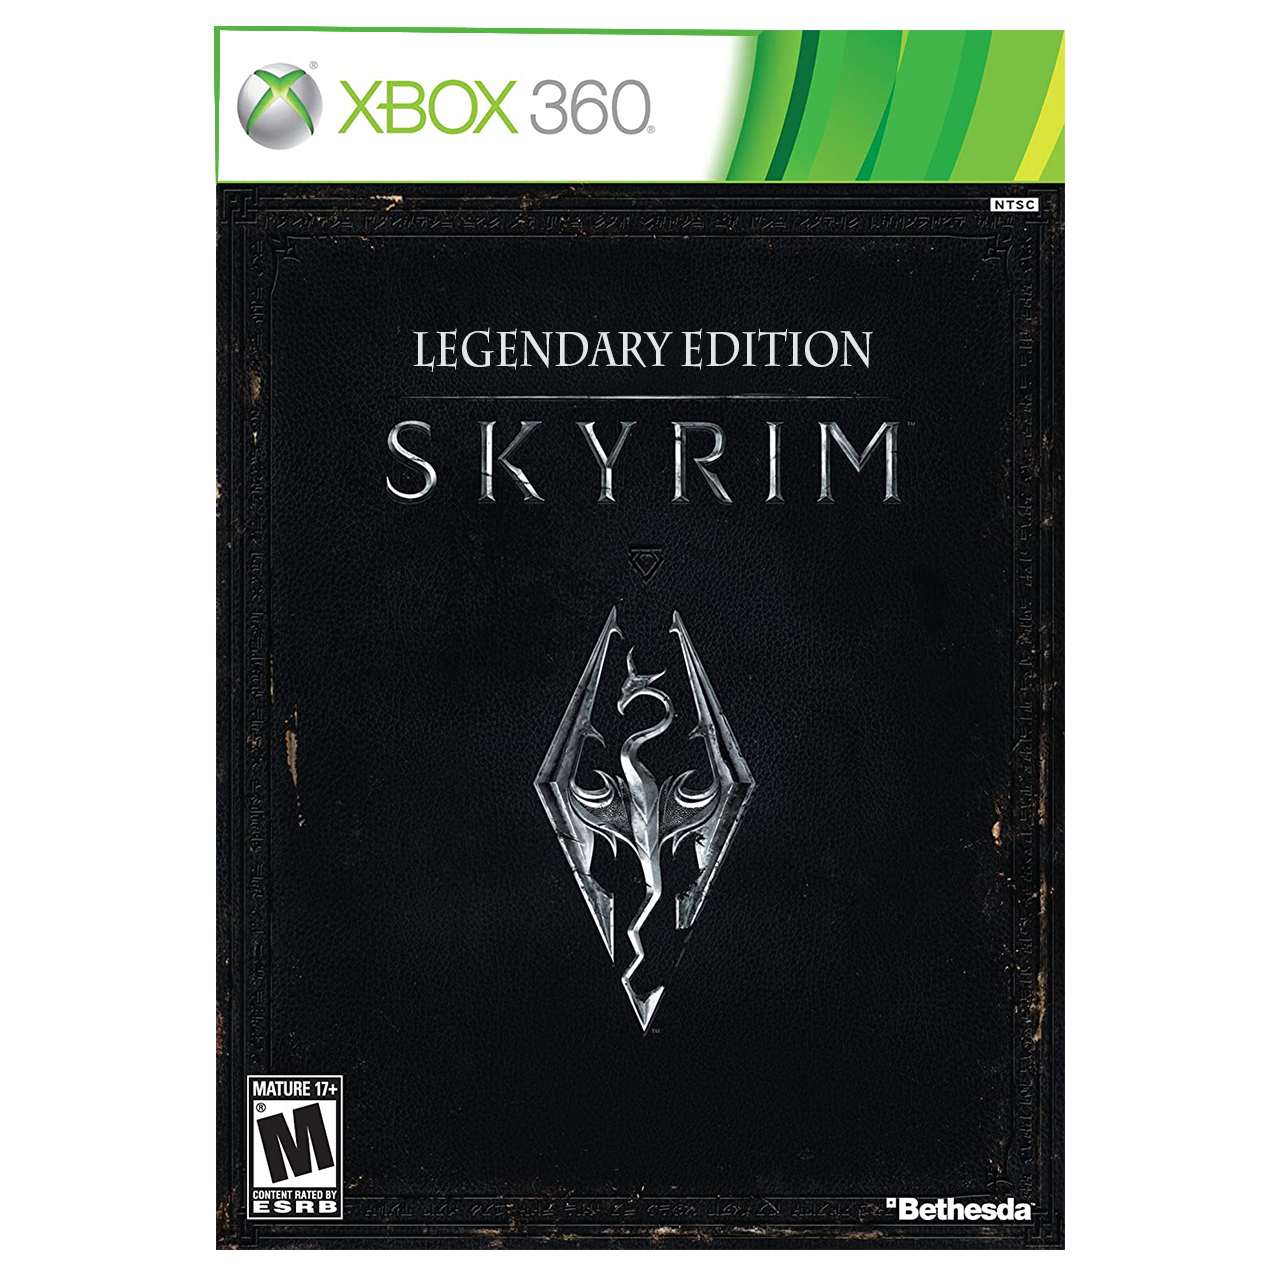 skyrim legendary edition contents